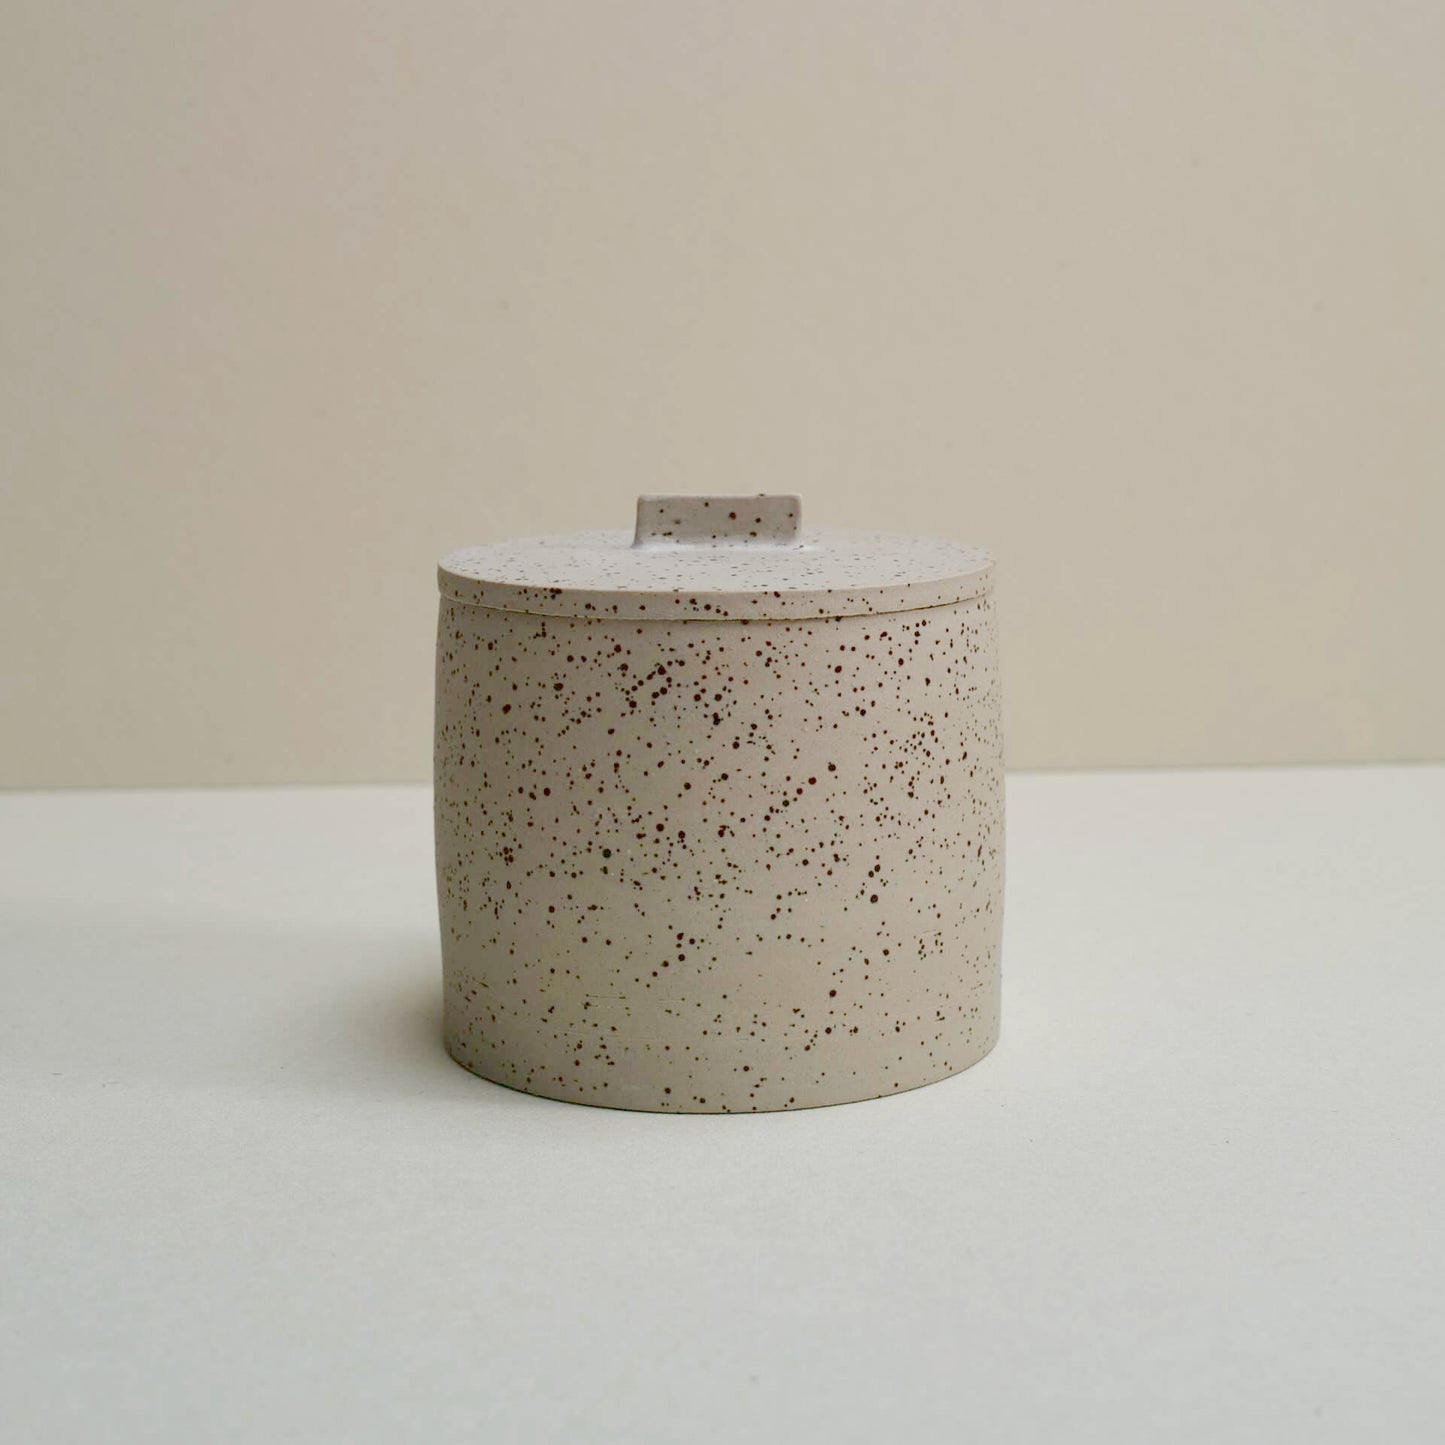 Speckled storage jar